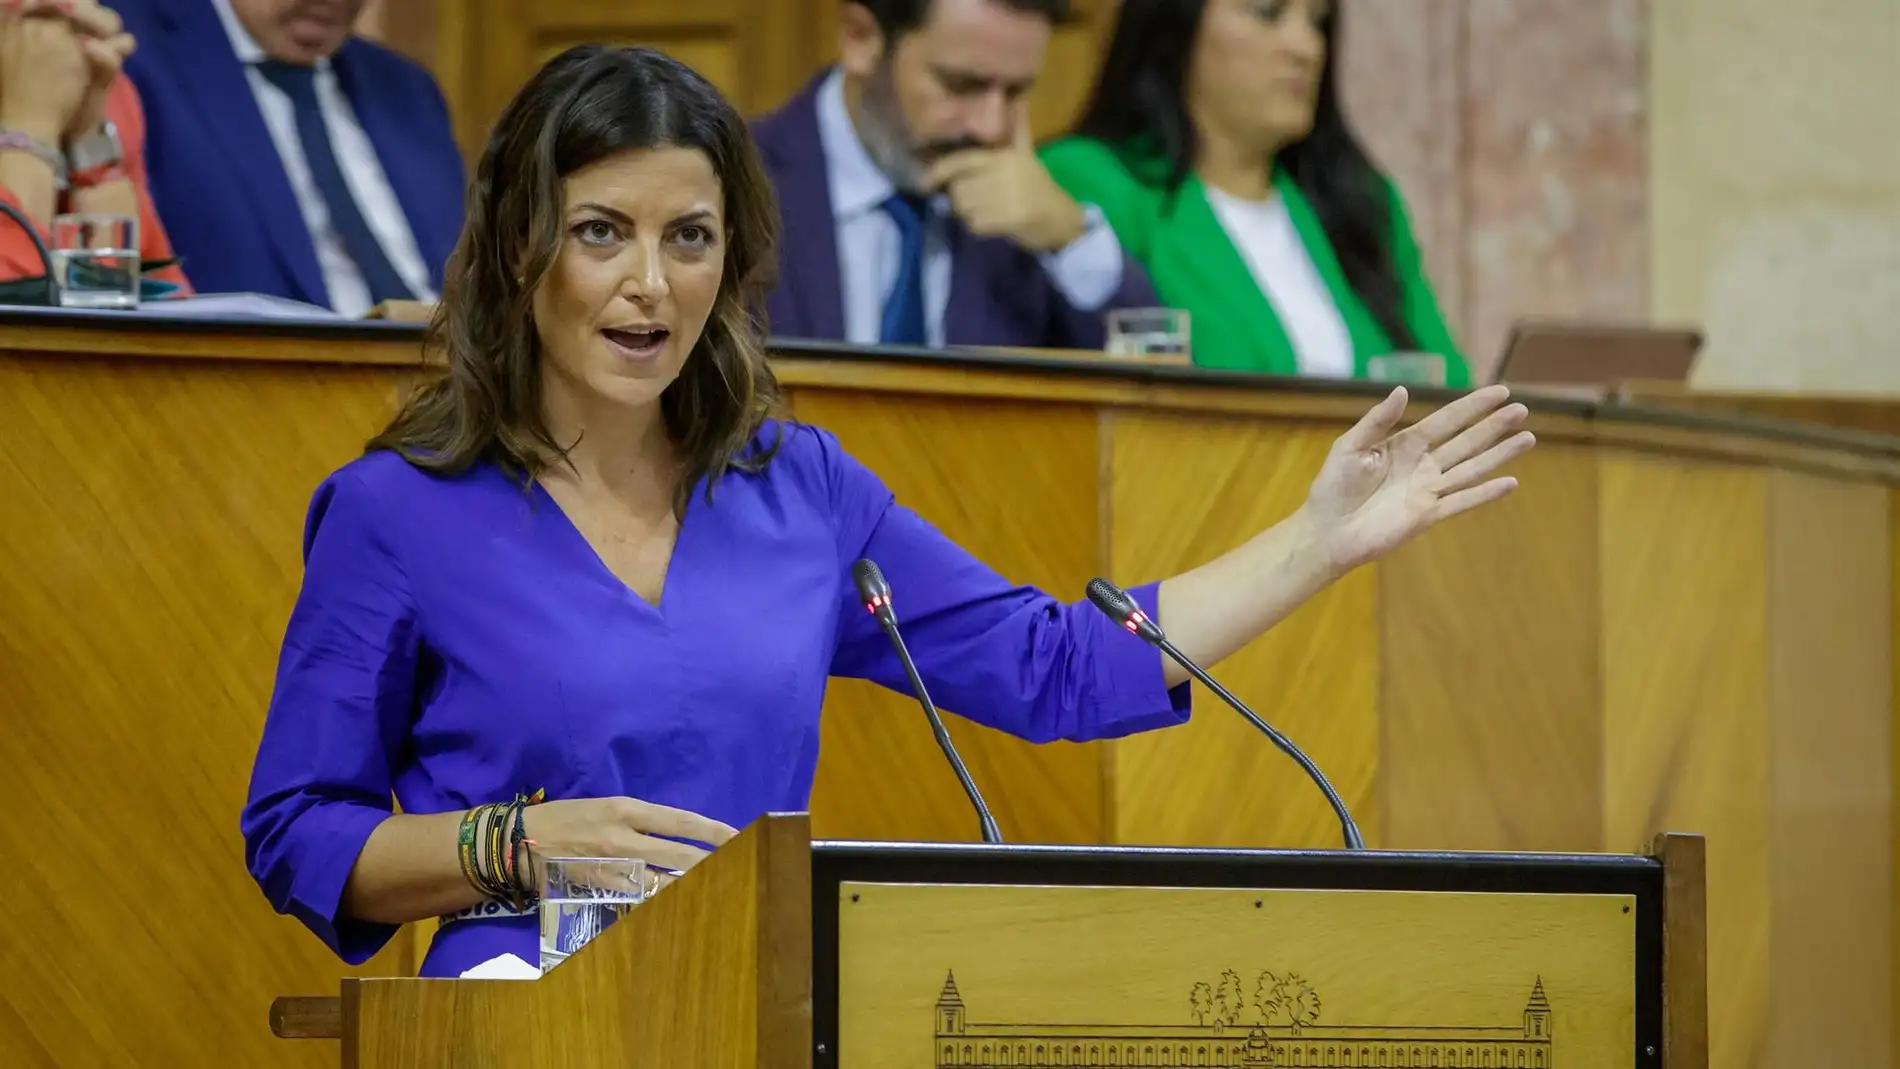 Macarena Olona anuncia que se retira de la política por motivos de salud: "Gracias por tanto"